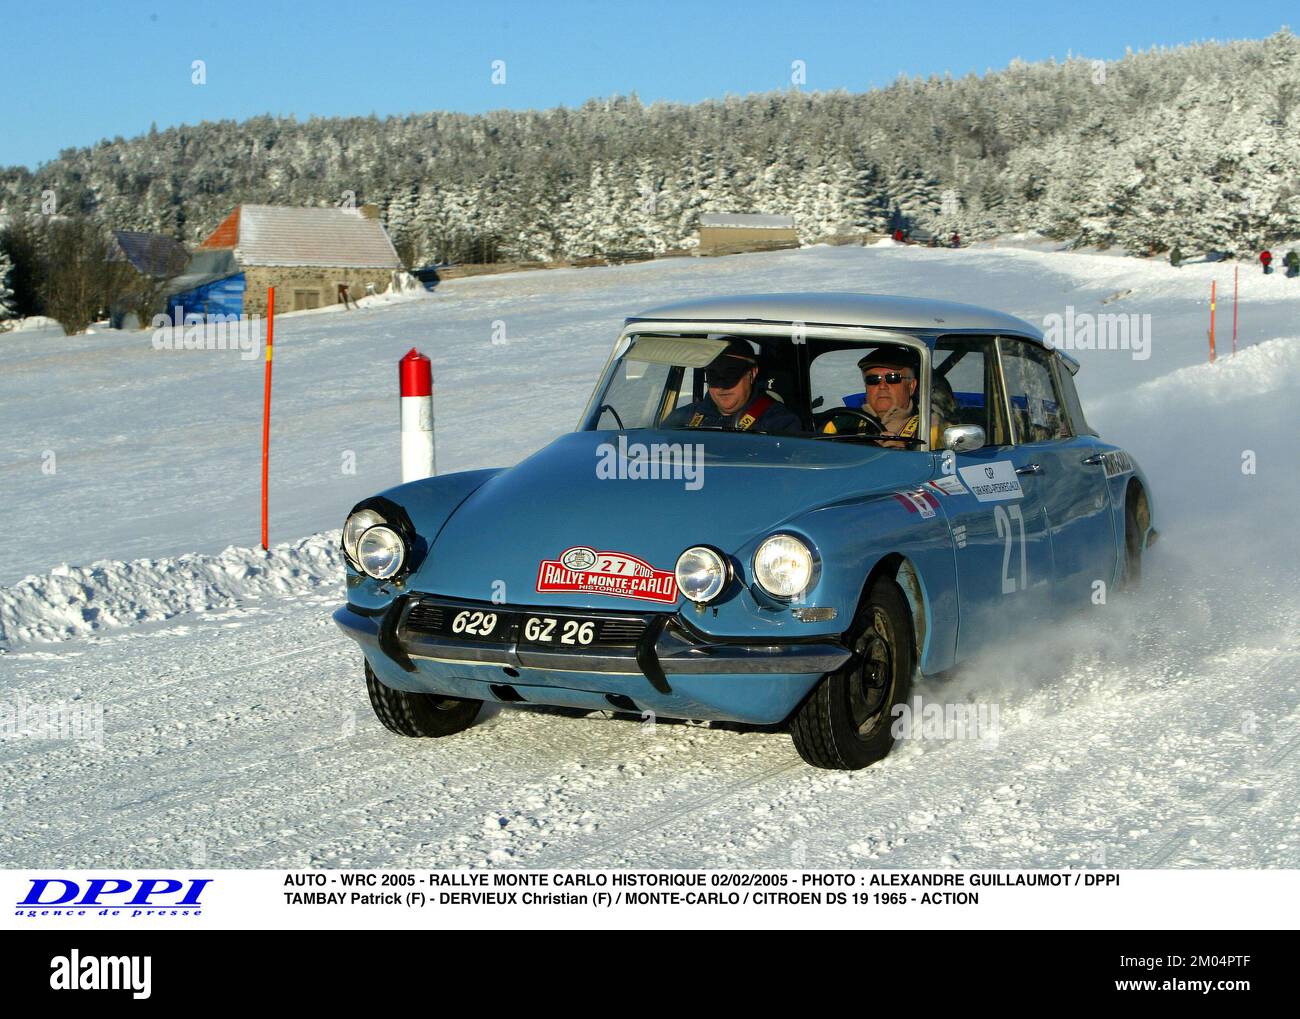 AUTO - WRC 2005 - RALLYE MONTE CARLO HISTORIQUE 02/02/2005 - FOTO : ALEXANDRE GUILLAUMOT / DPPI TAMBAY PATRICK (F) - DERVIEUX CHRISTIAN (F) / MONTE-CARLO / CITROEN DS 19 1965 - ACTION Stockfoto